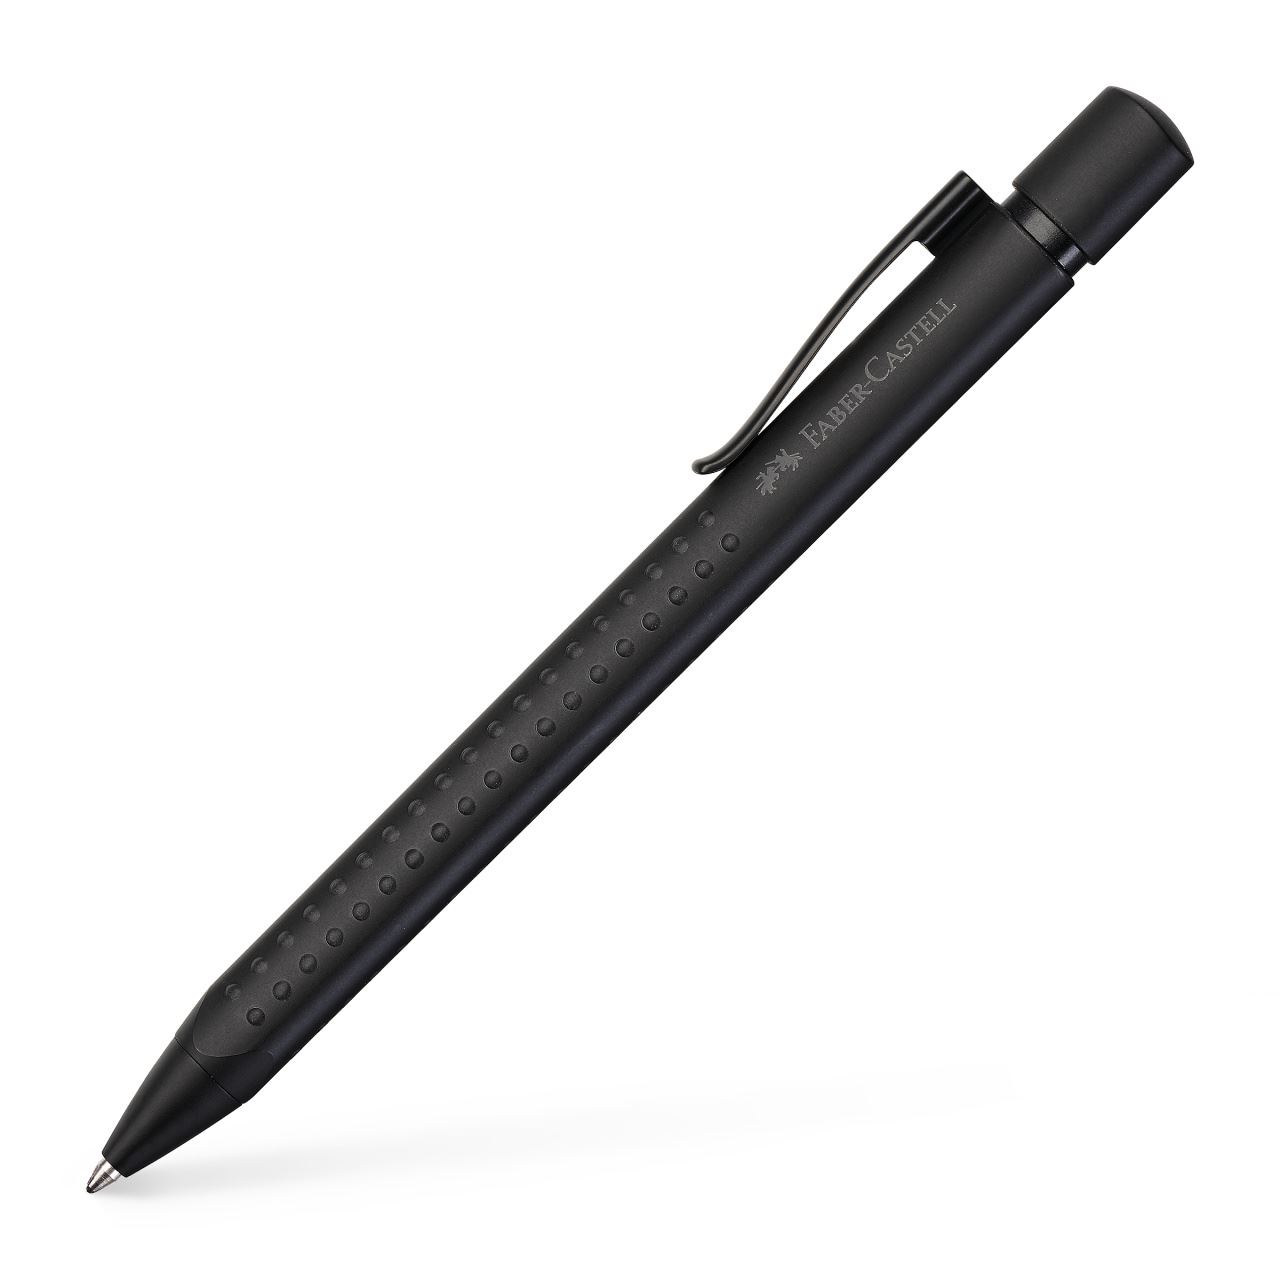 Faber-Castell - Στυλό Grip Edition, XB, όλο μαύρο